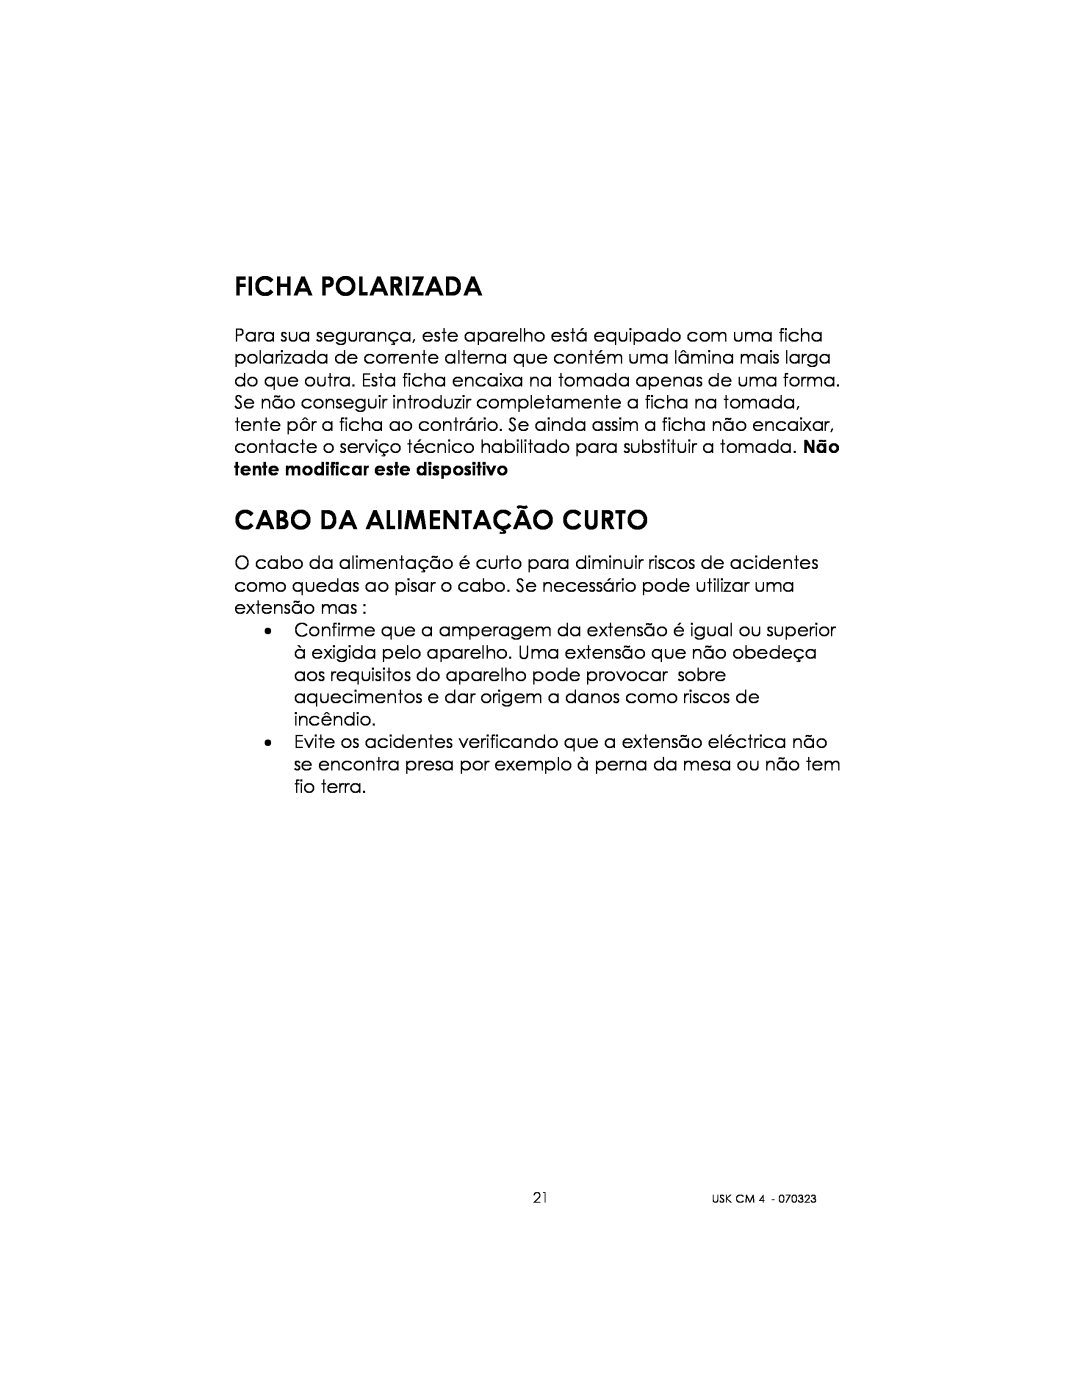 Kalorik USK CM 4 manual Ficha Polarizada, Cabo Da Alimentação Curto 